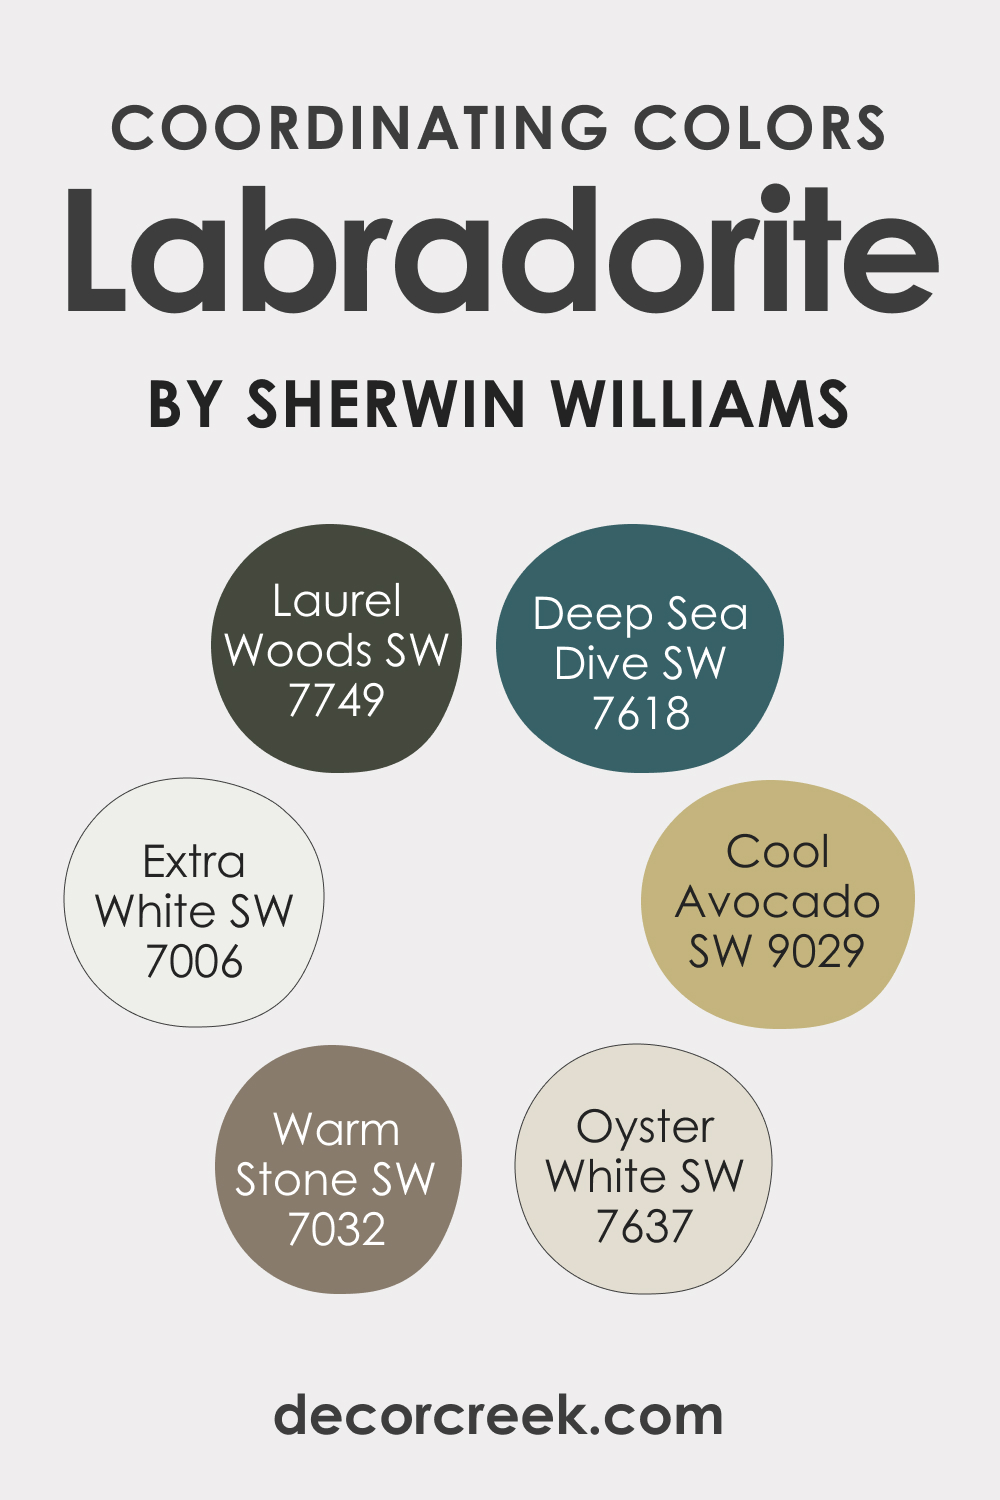 Coordinating Colors of SW 7619 Labradorite